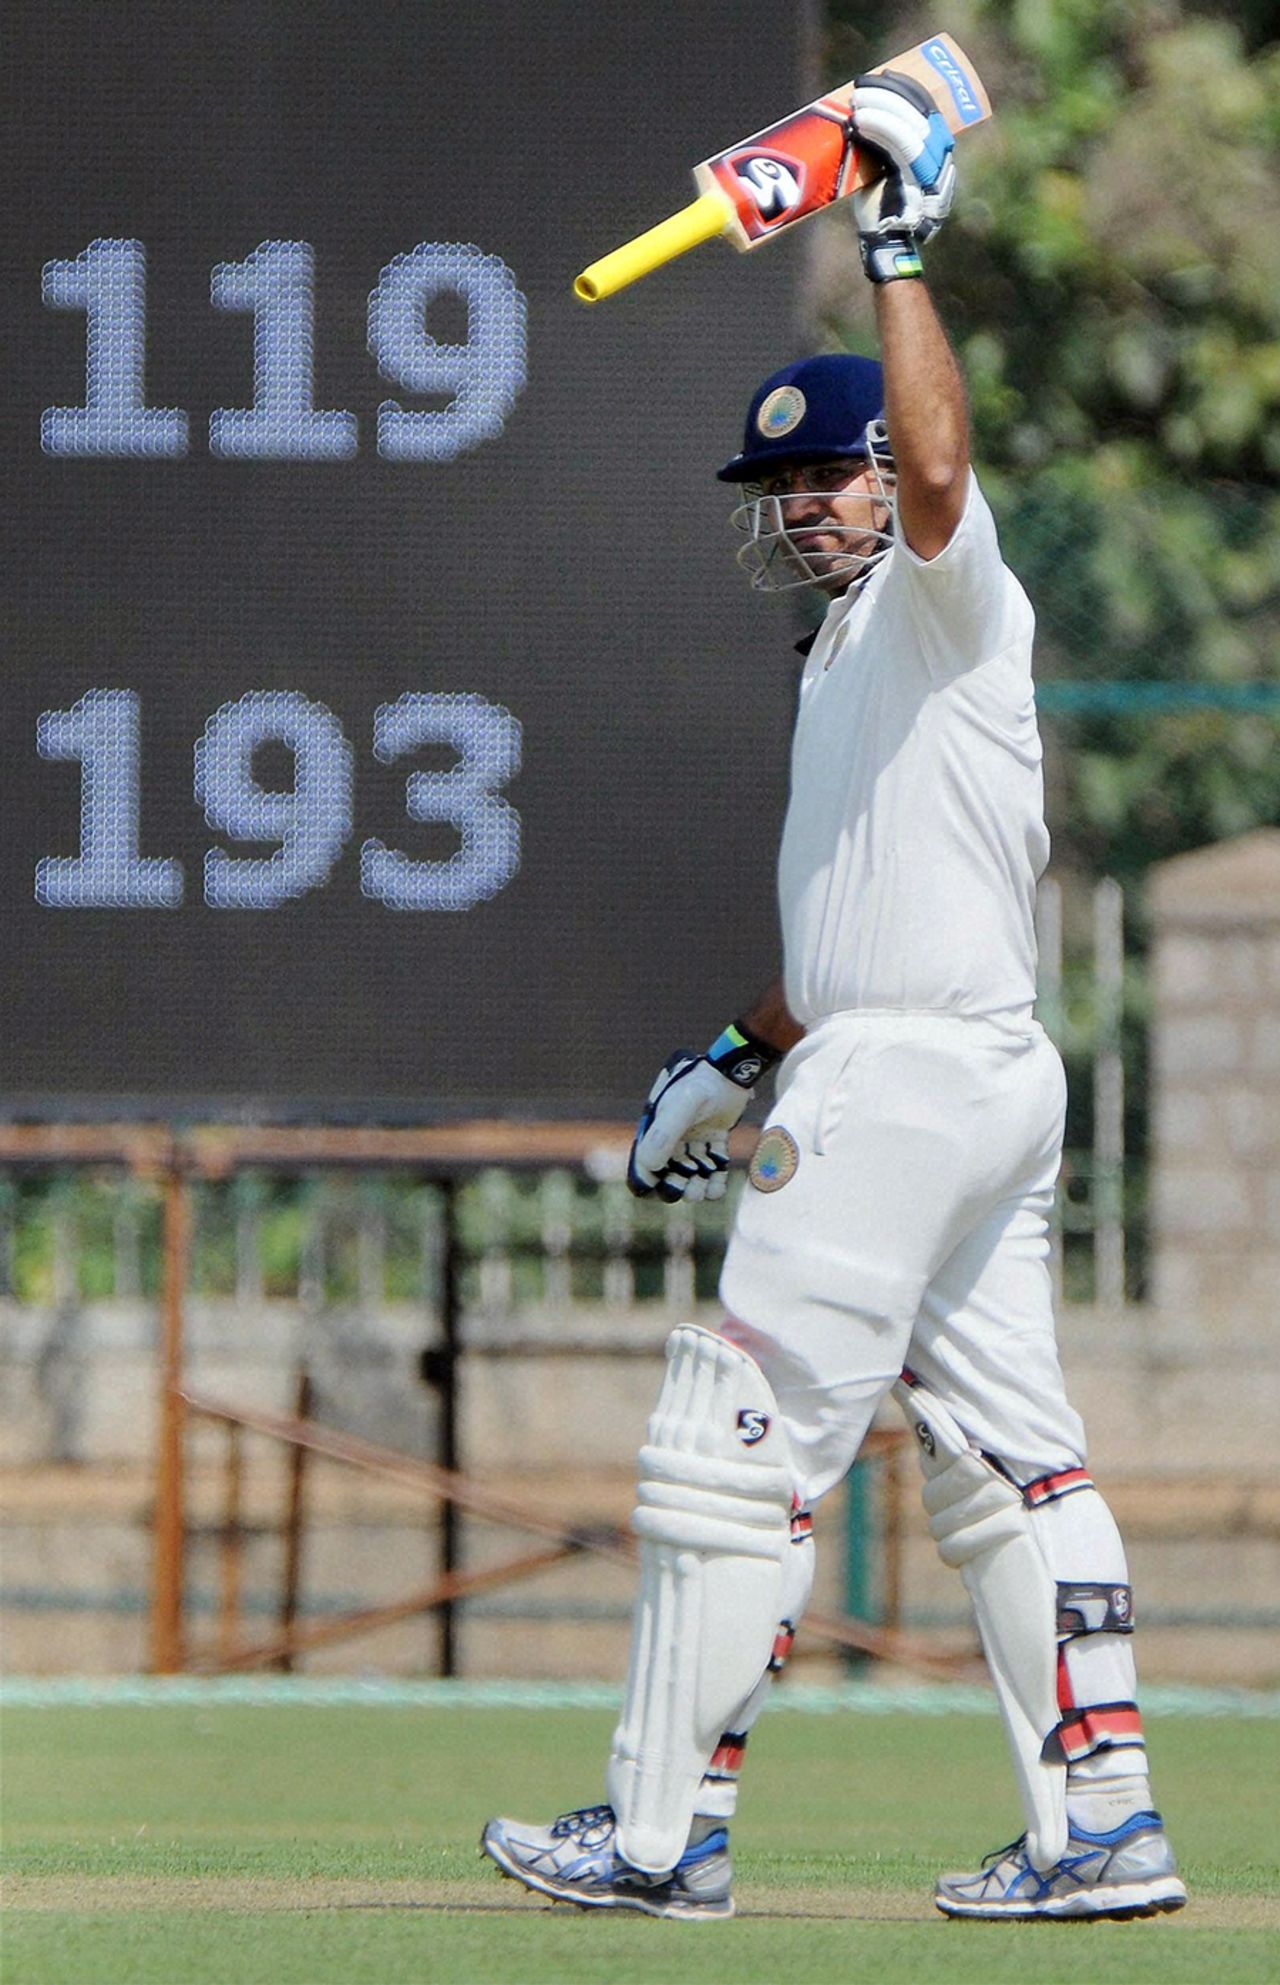 Virender Sehwag raises his bat after scoring a century against Karnataka, Karnataka v Haryana, Ranji Trophy 2015-16, Group A, Mysore, 1st day, October 22, 2015